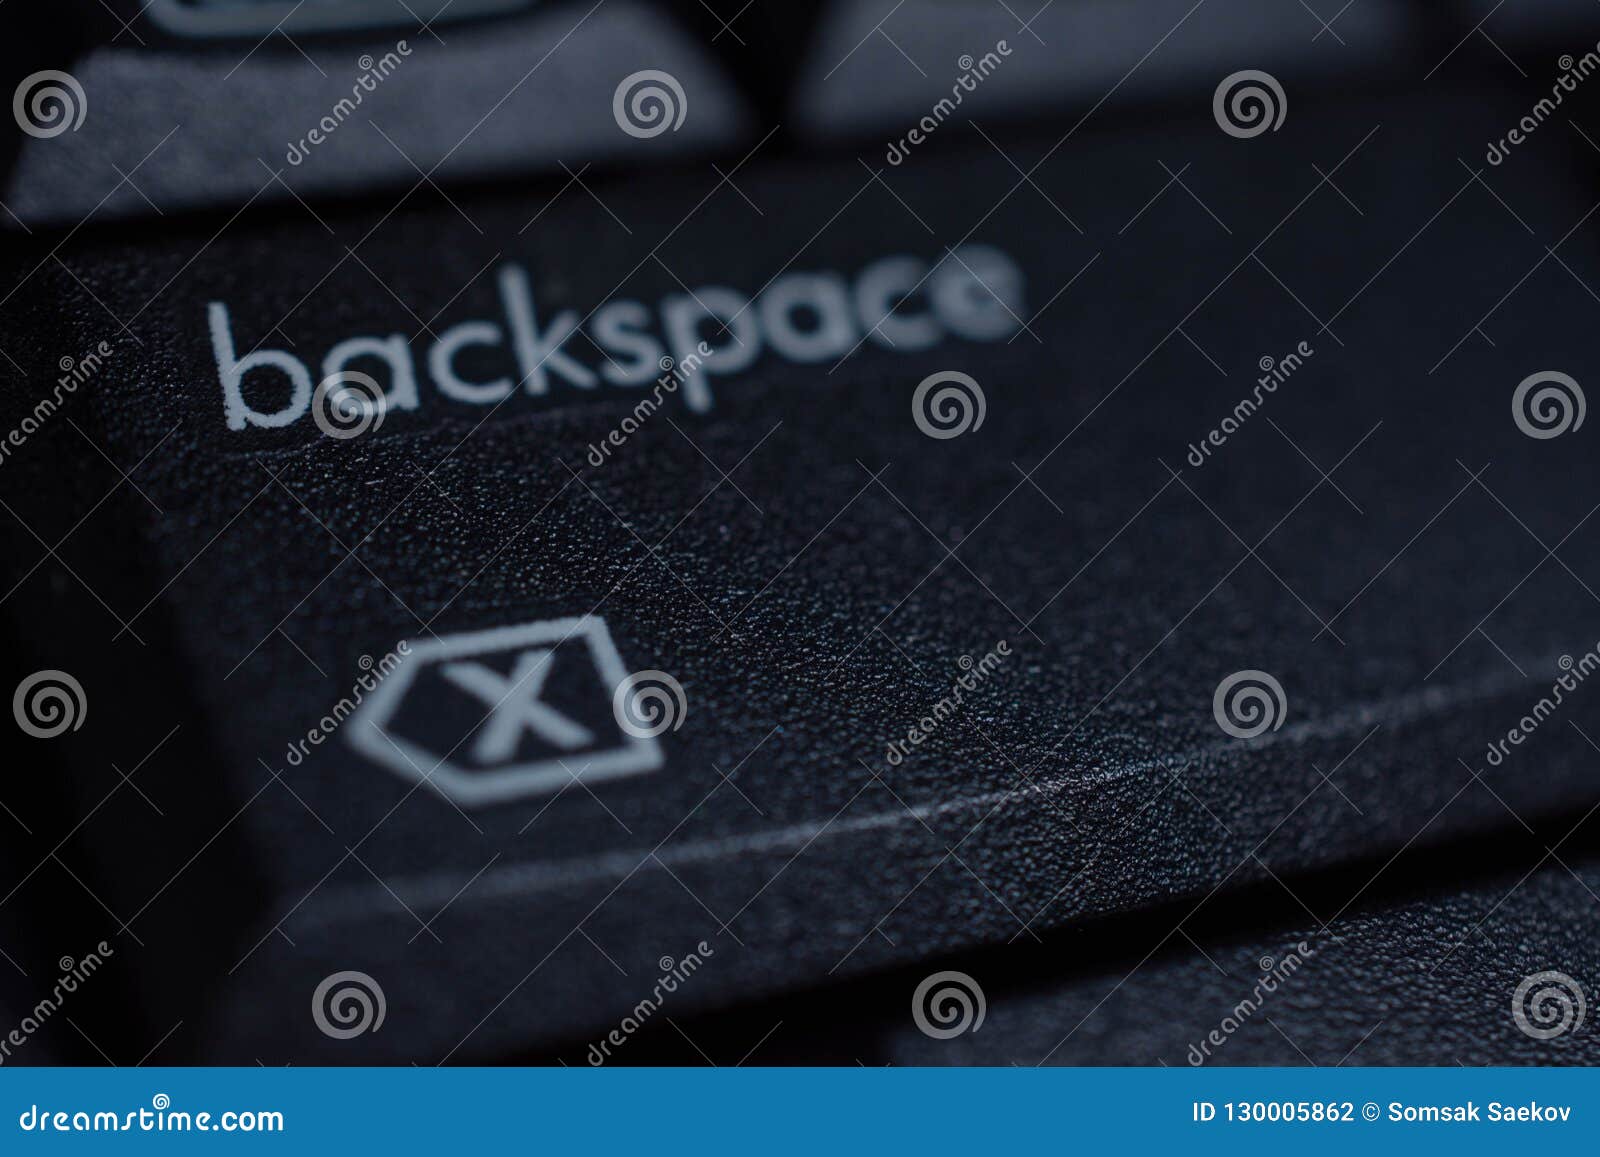 black backspace button on keybord